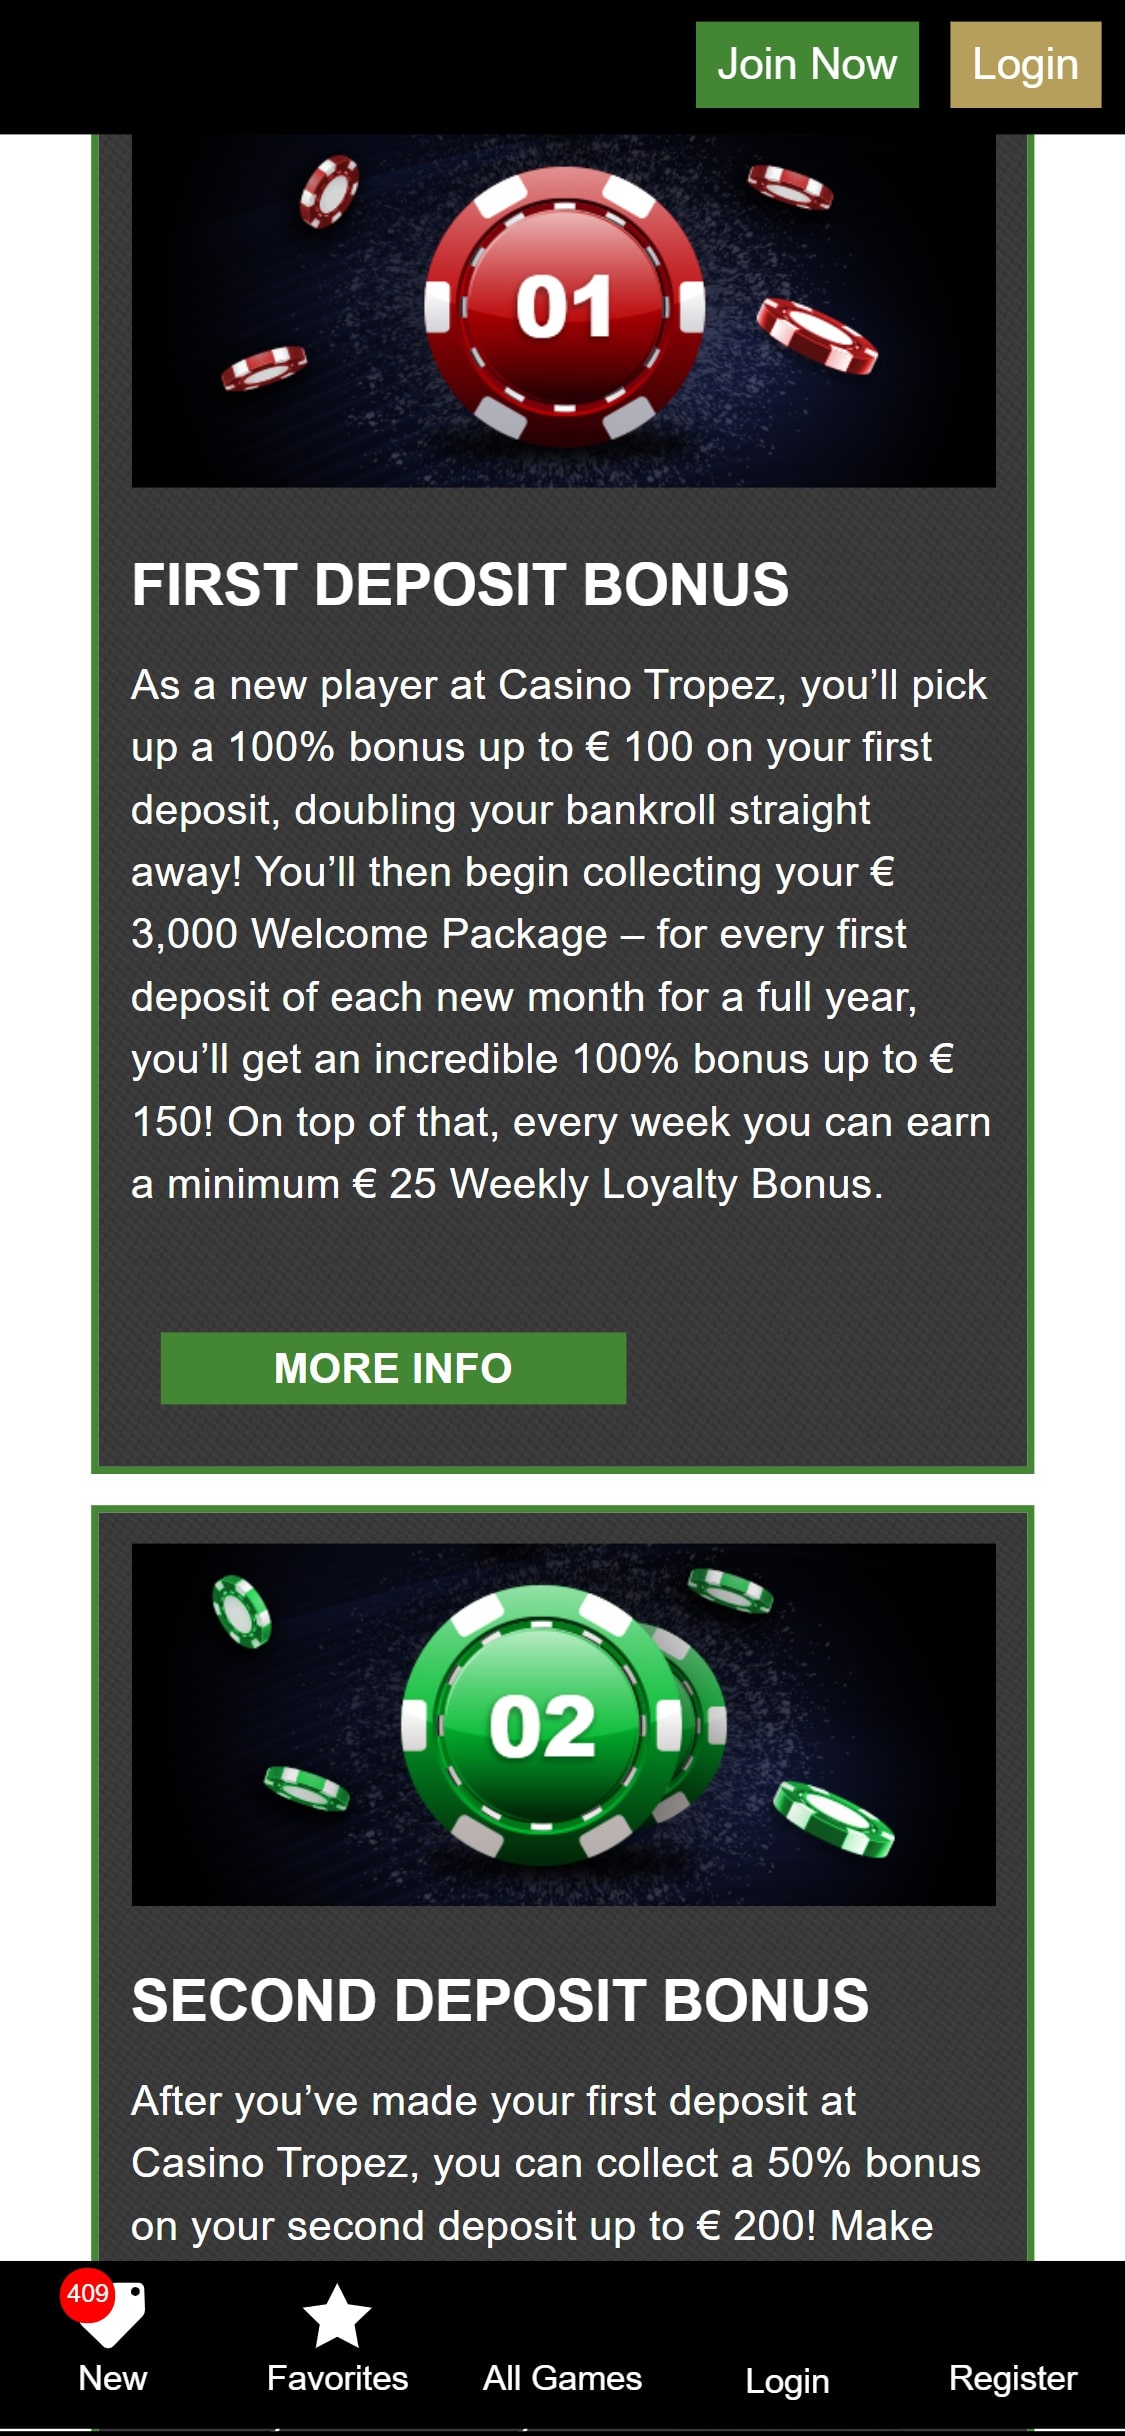 Casino Tropez Mobile No Deposit Bonus Review